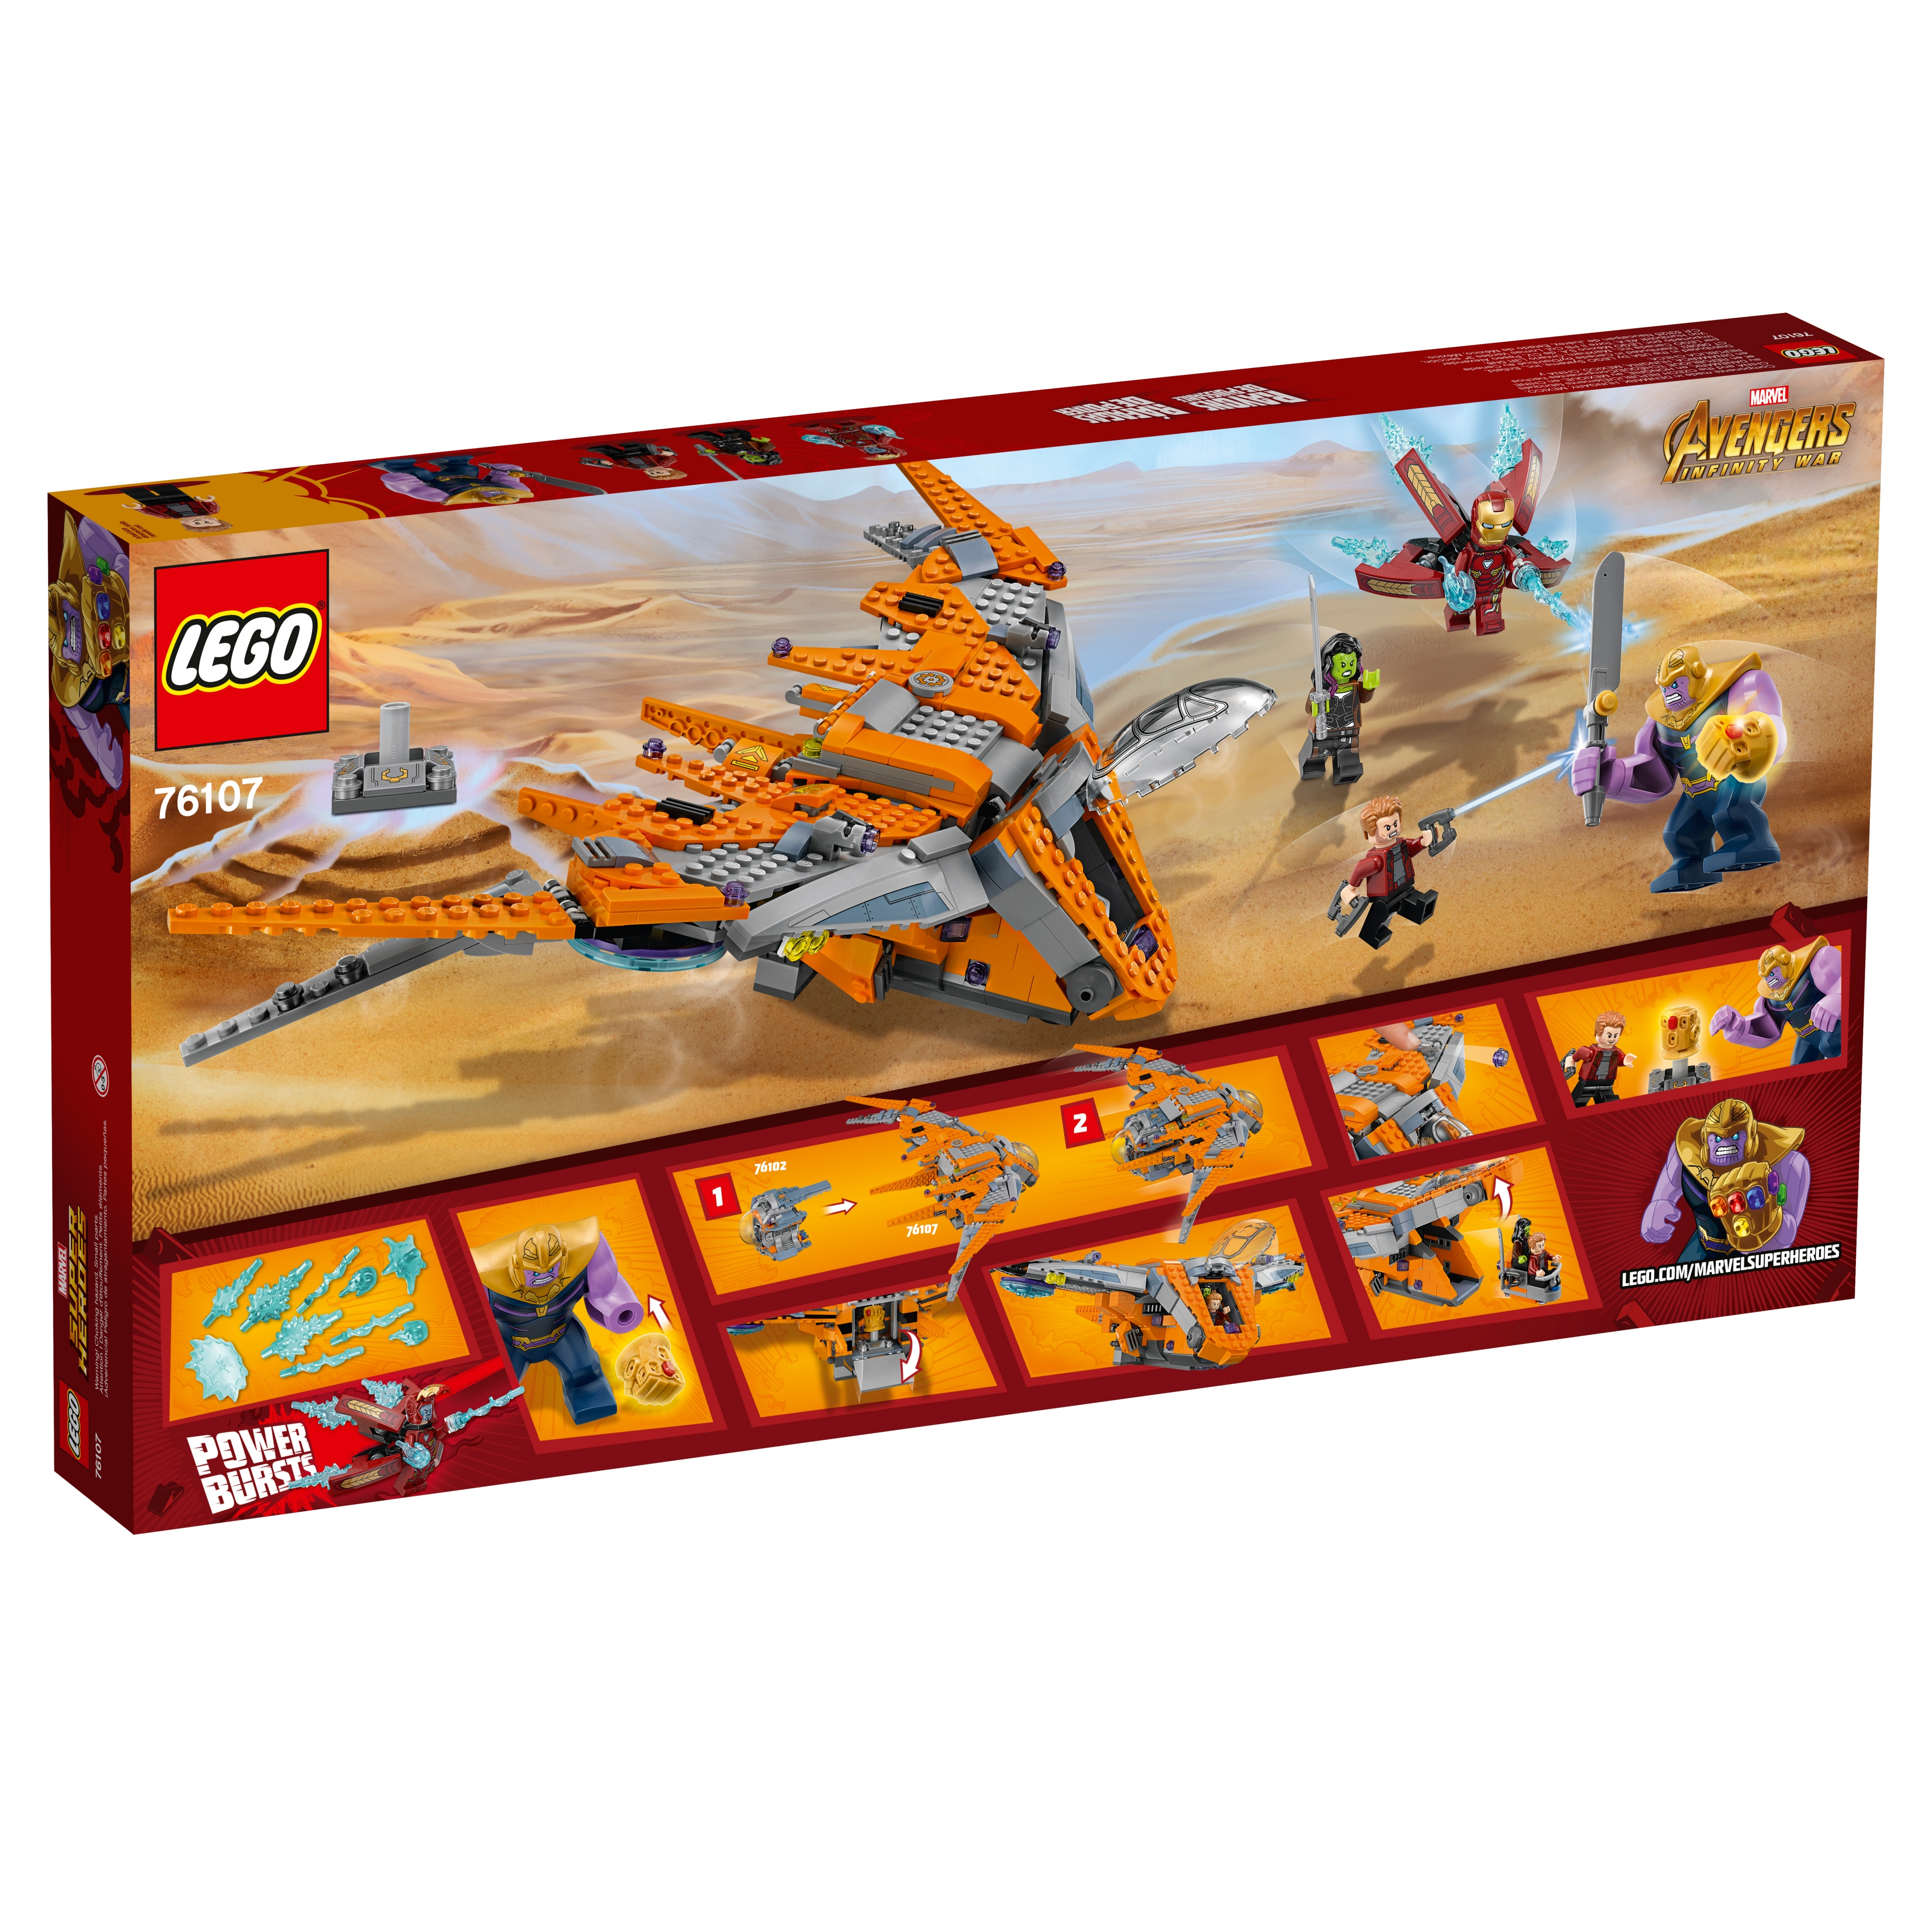 batalla definitiva 76107 | Oficial LEGO® Shop ES